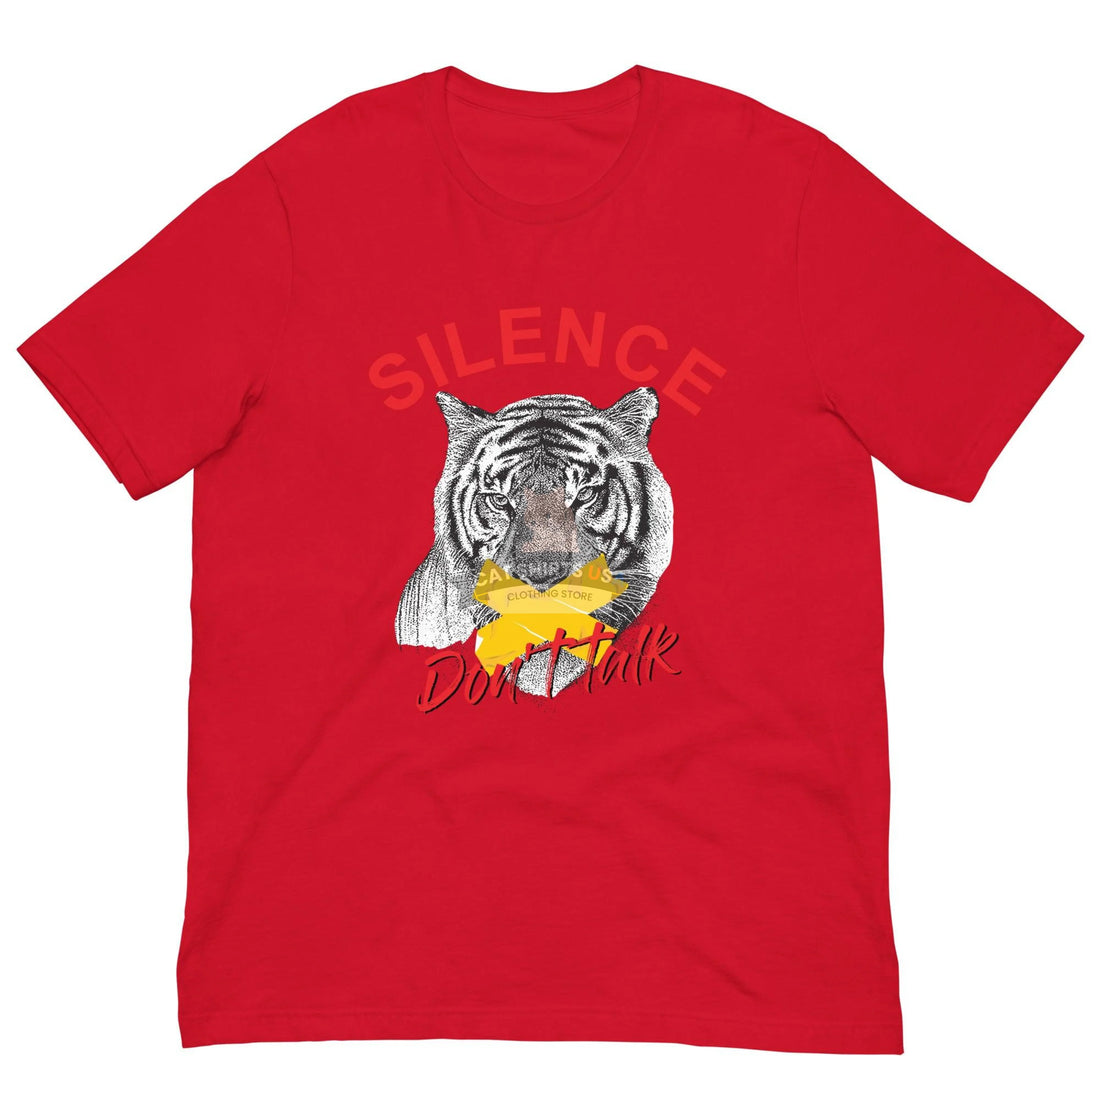 Silence Cat Shirt - Cat Shirts USA